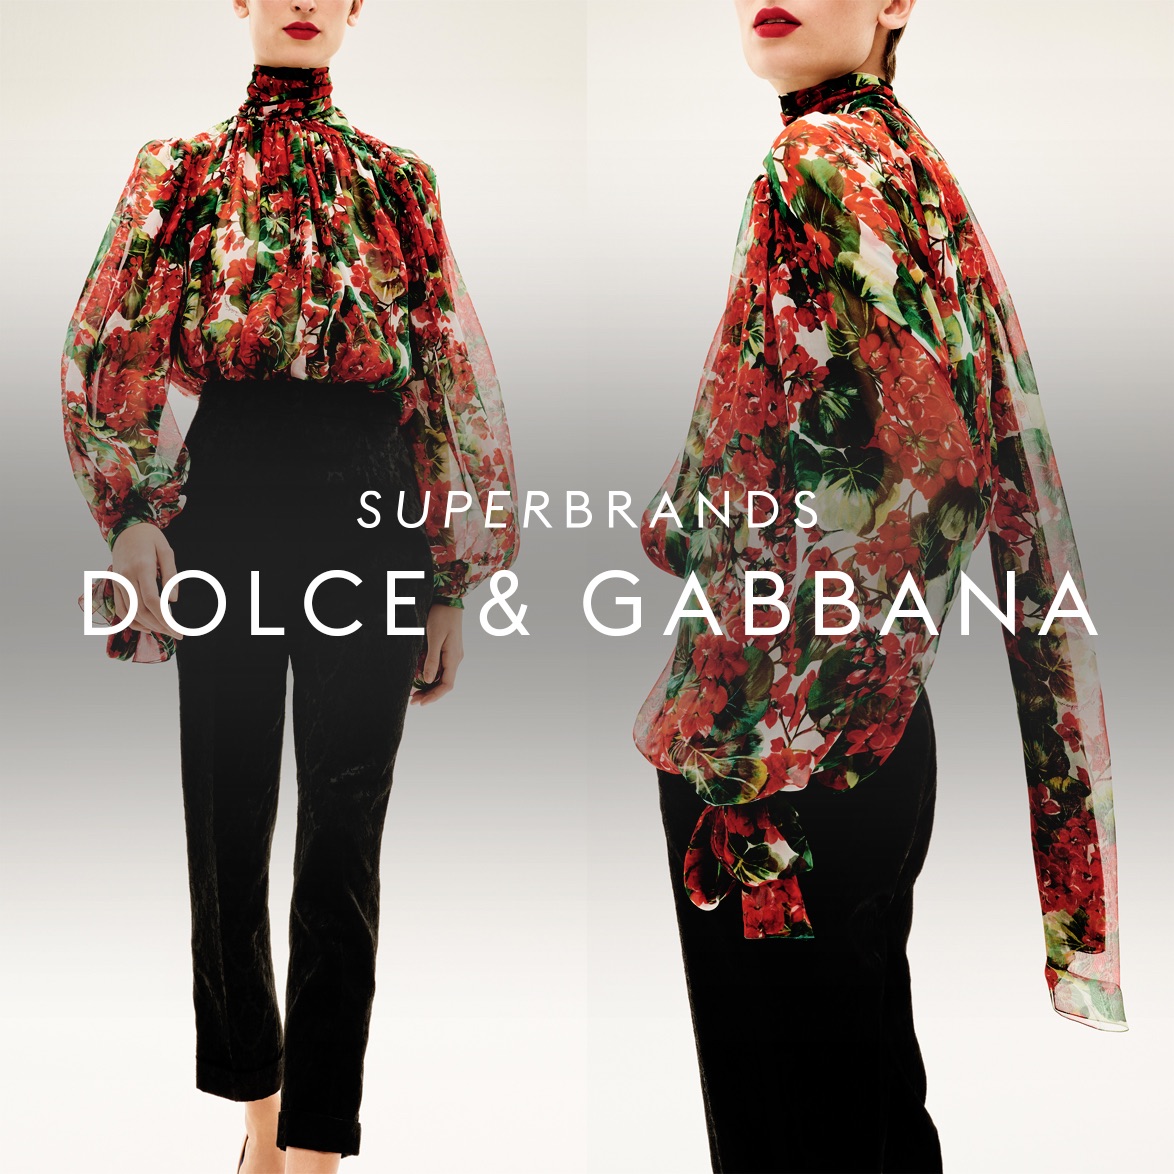 THE OUTNET现有Dolce & Gabbana Sale 低至3.5折优惠